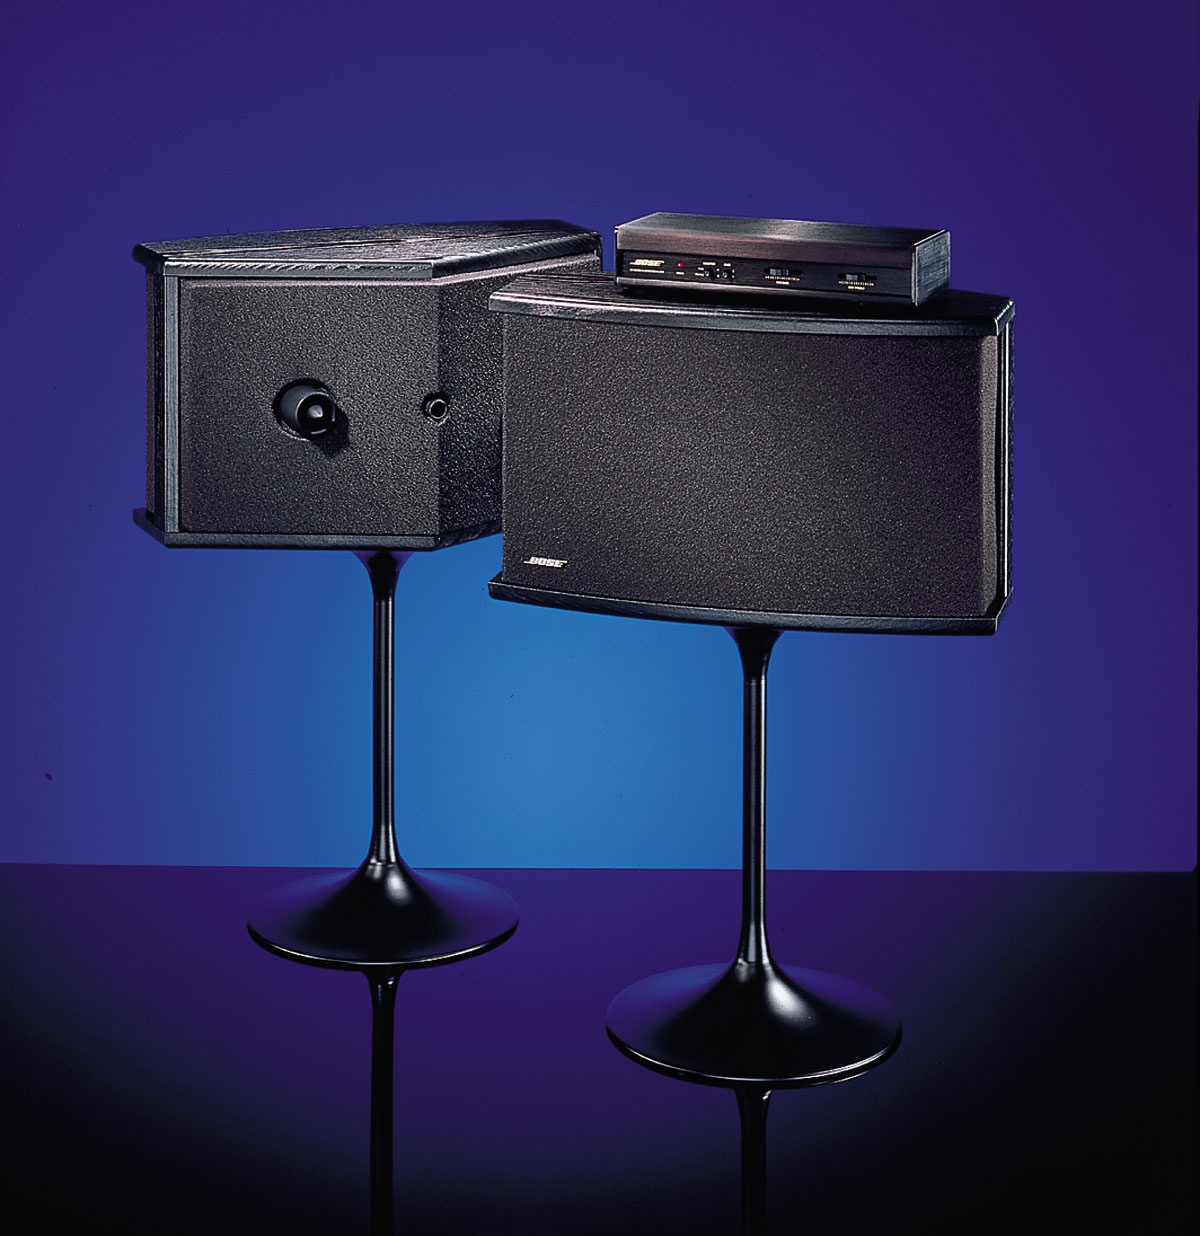 Sistem de boxe stereo Bose 901 - Sistem de boxe stereo Bose 901